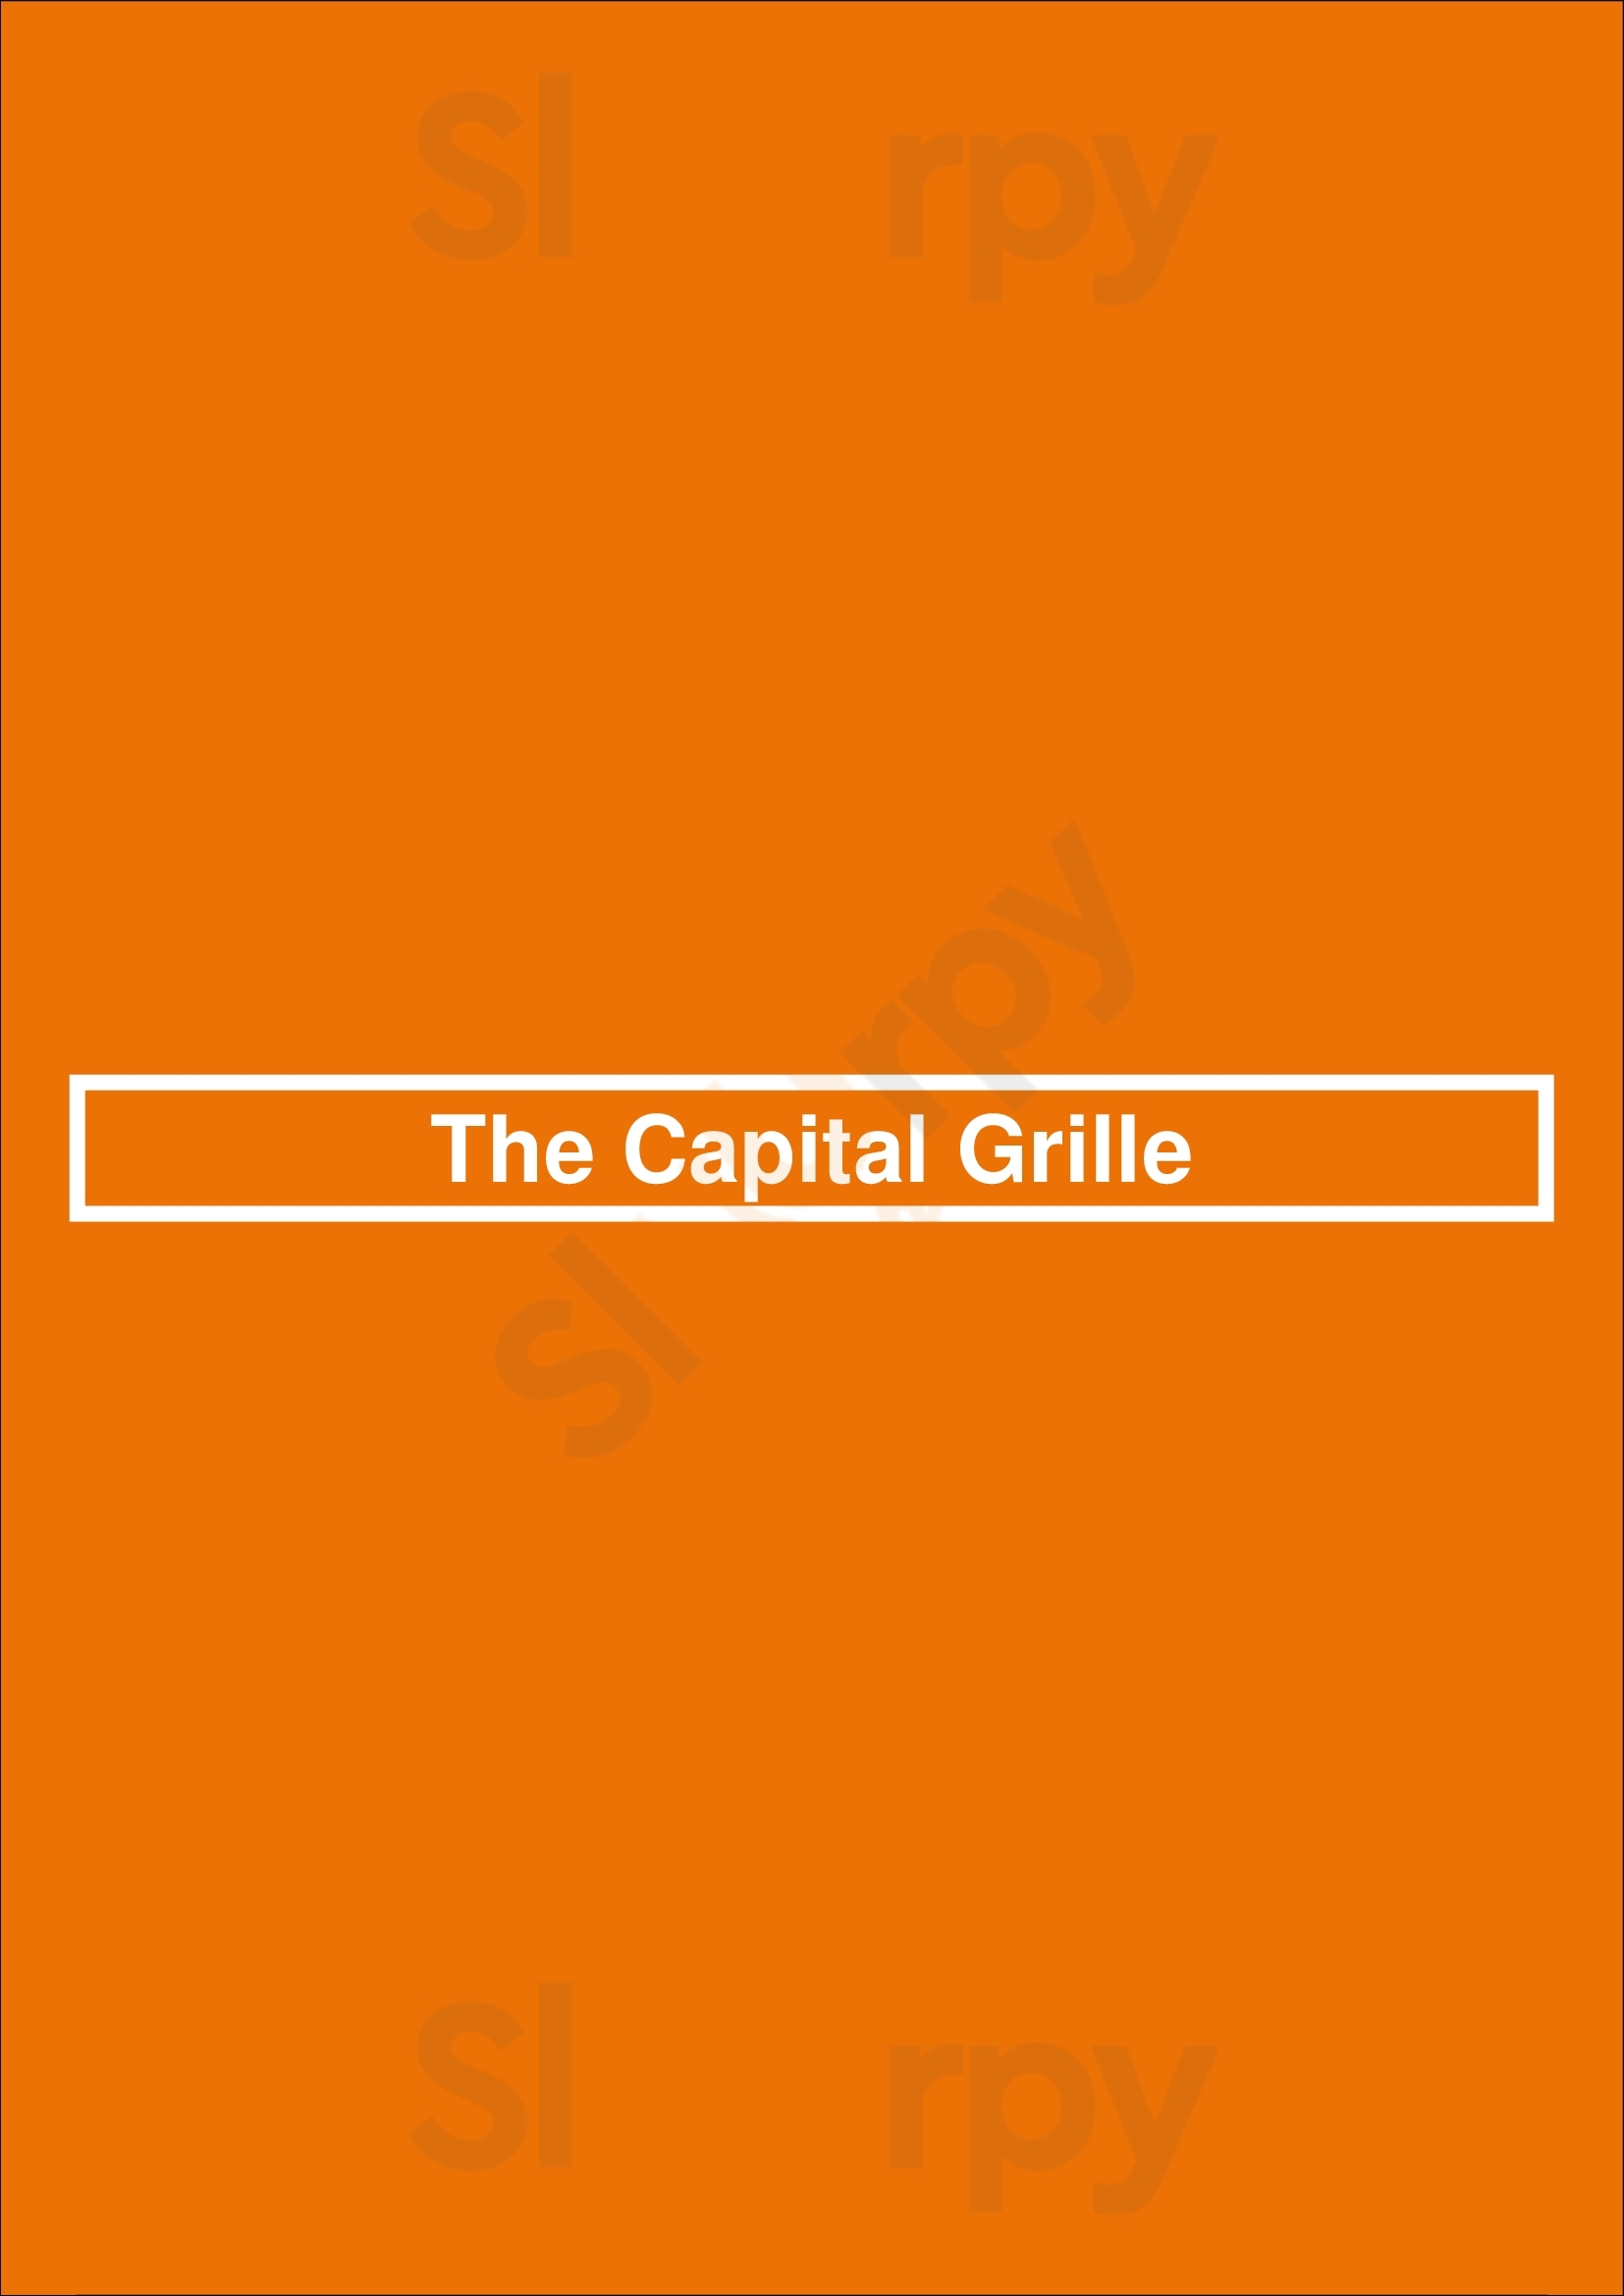 The Capital Grille Minneapolis Menu - 1